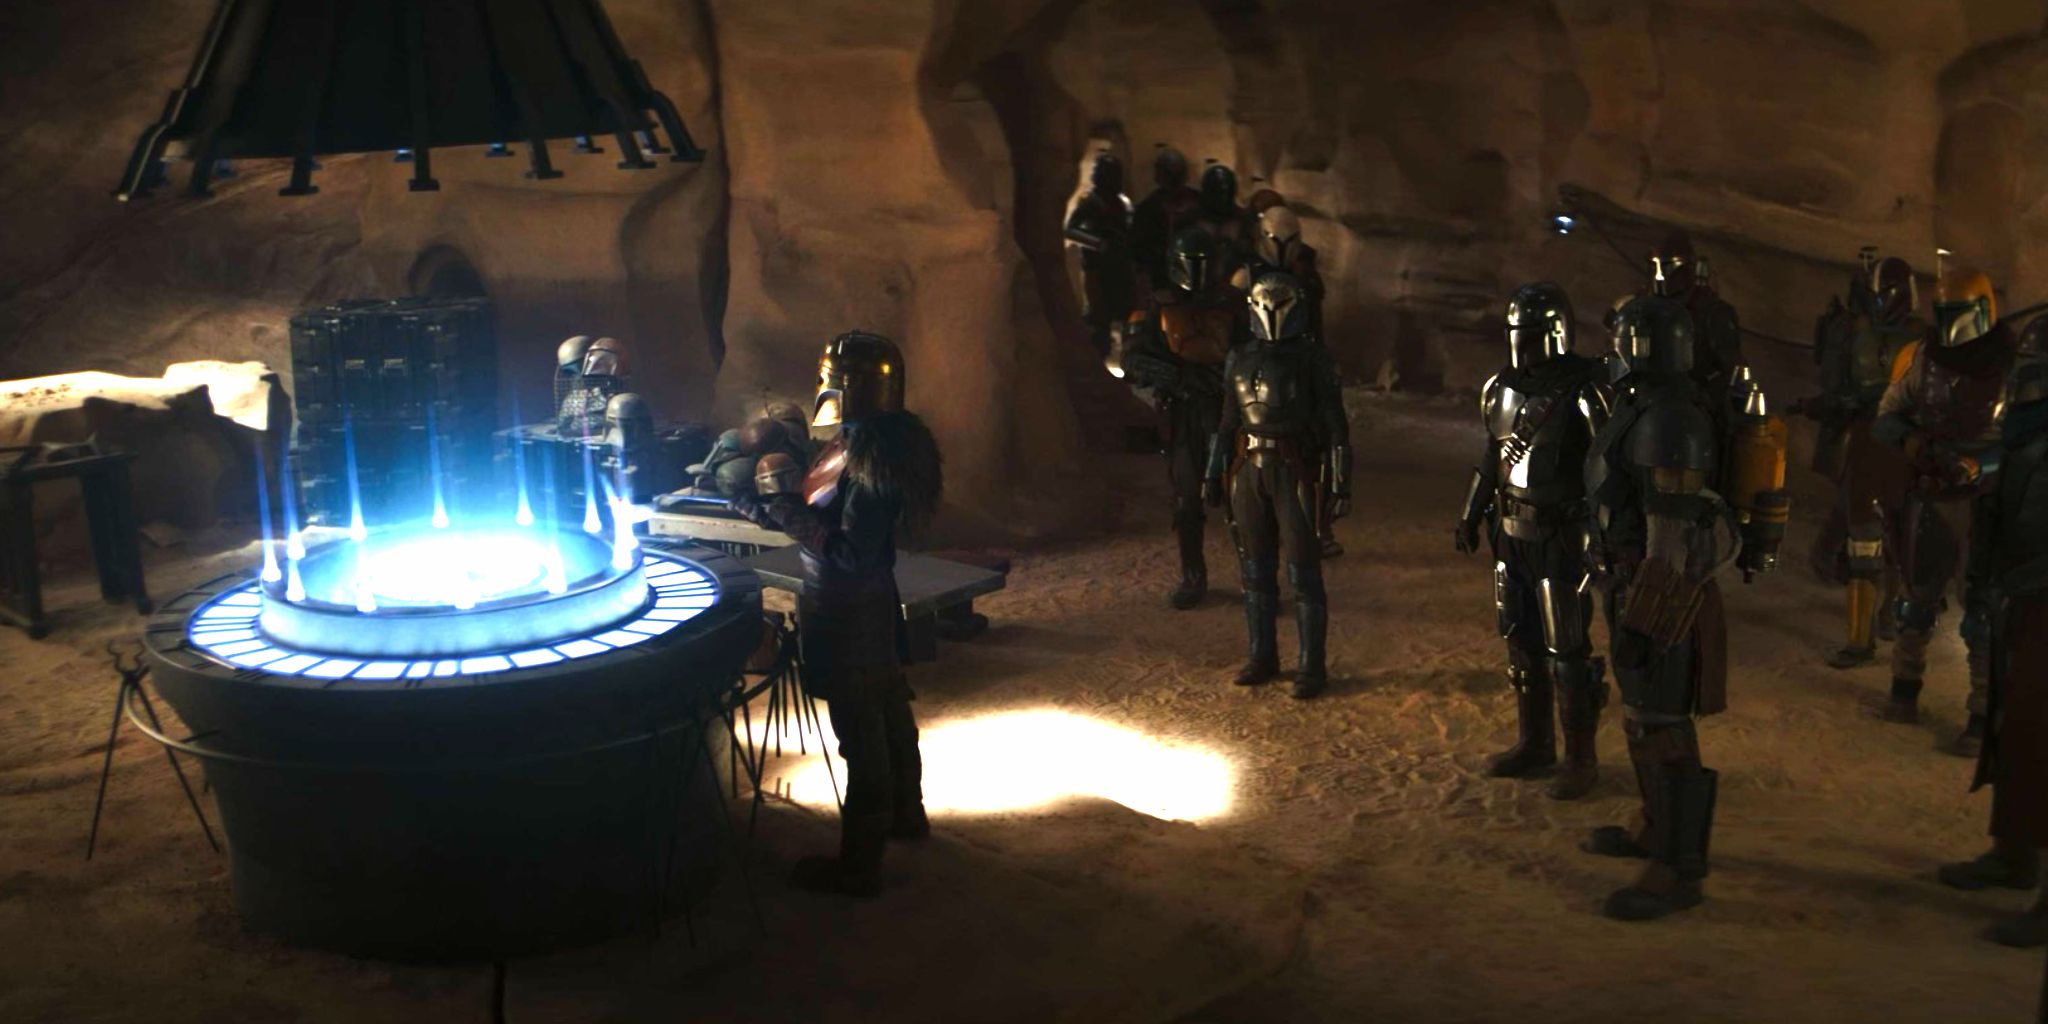 Din Djarin, Bo-Katan Kryze, the Armorer, Paz Vizsla, and more Mandalorians gather in the forge in The Mandalorian season 3 episode 3